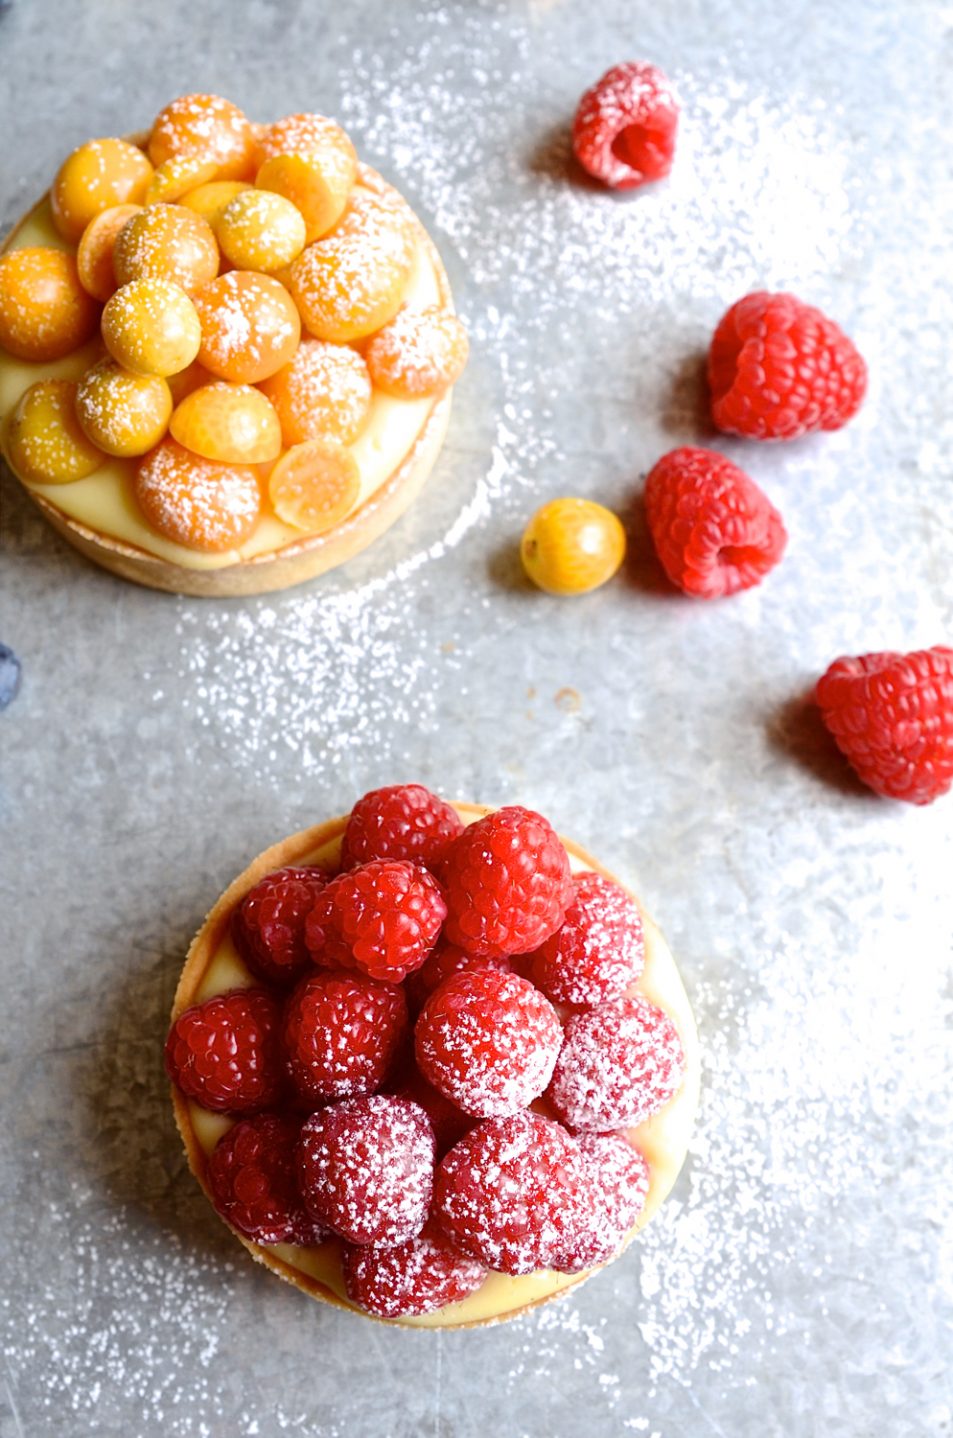 Crème pâtissière summer berry tarts | Bibbyskitchen recipes